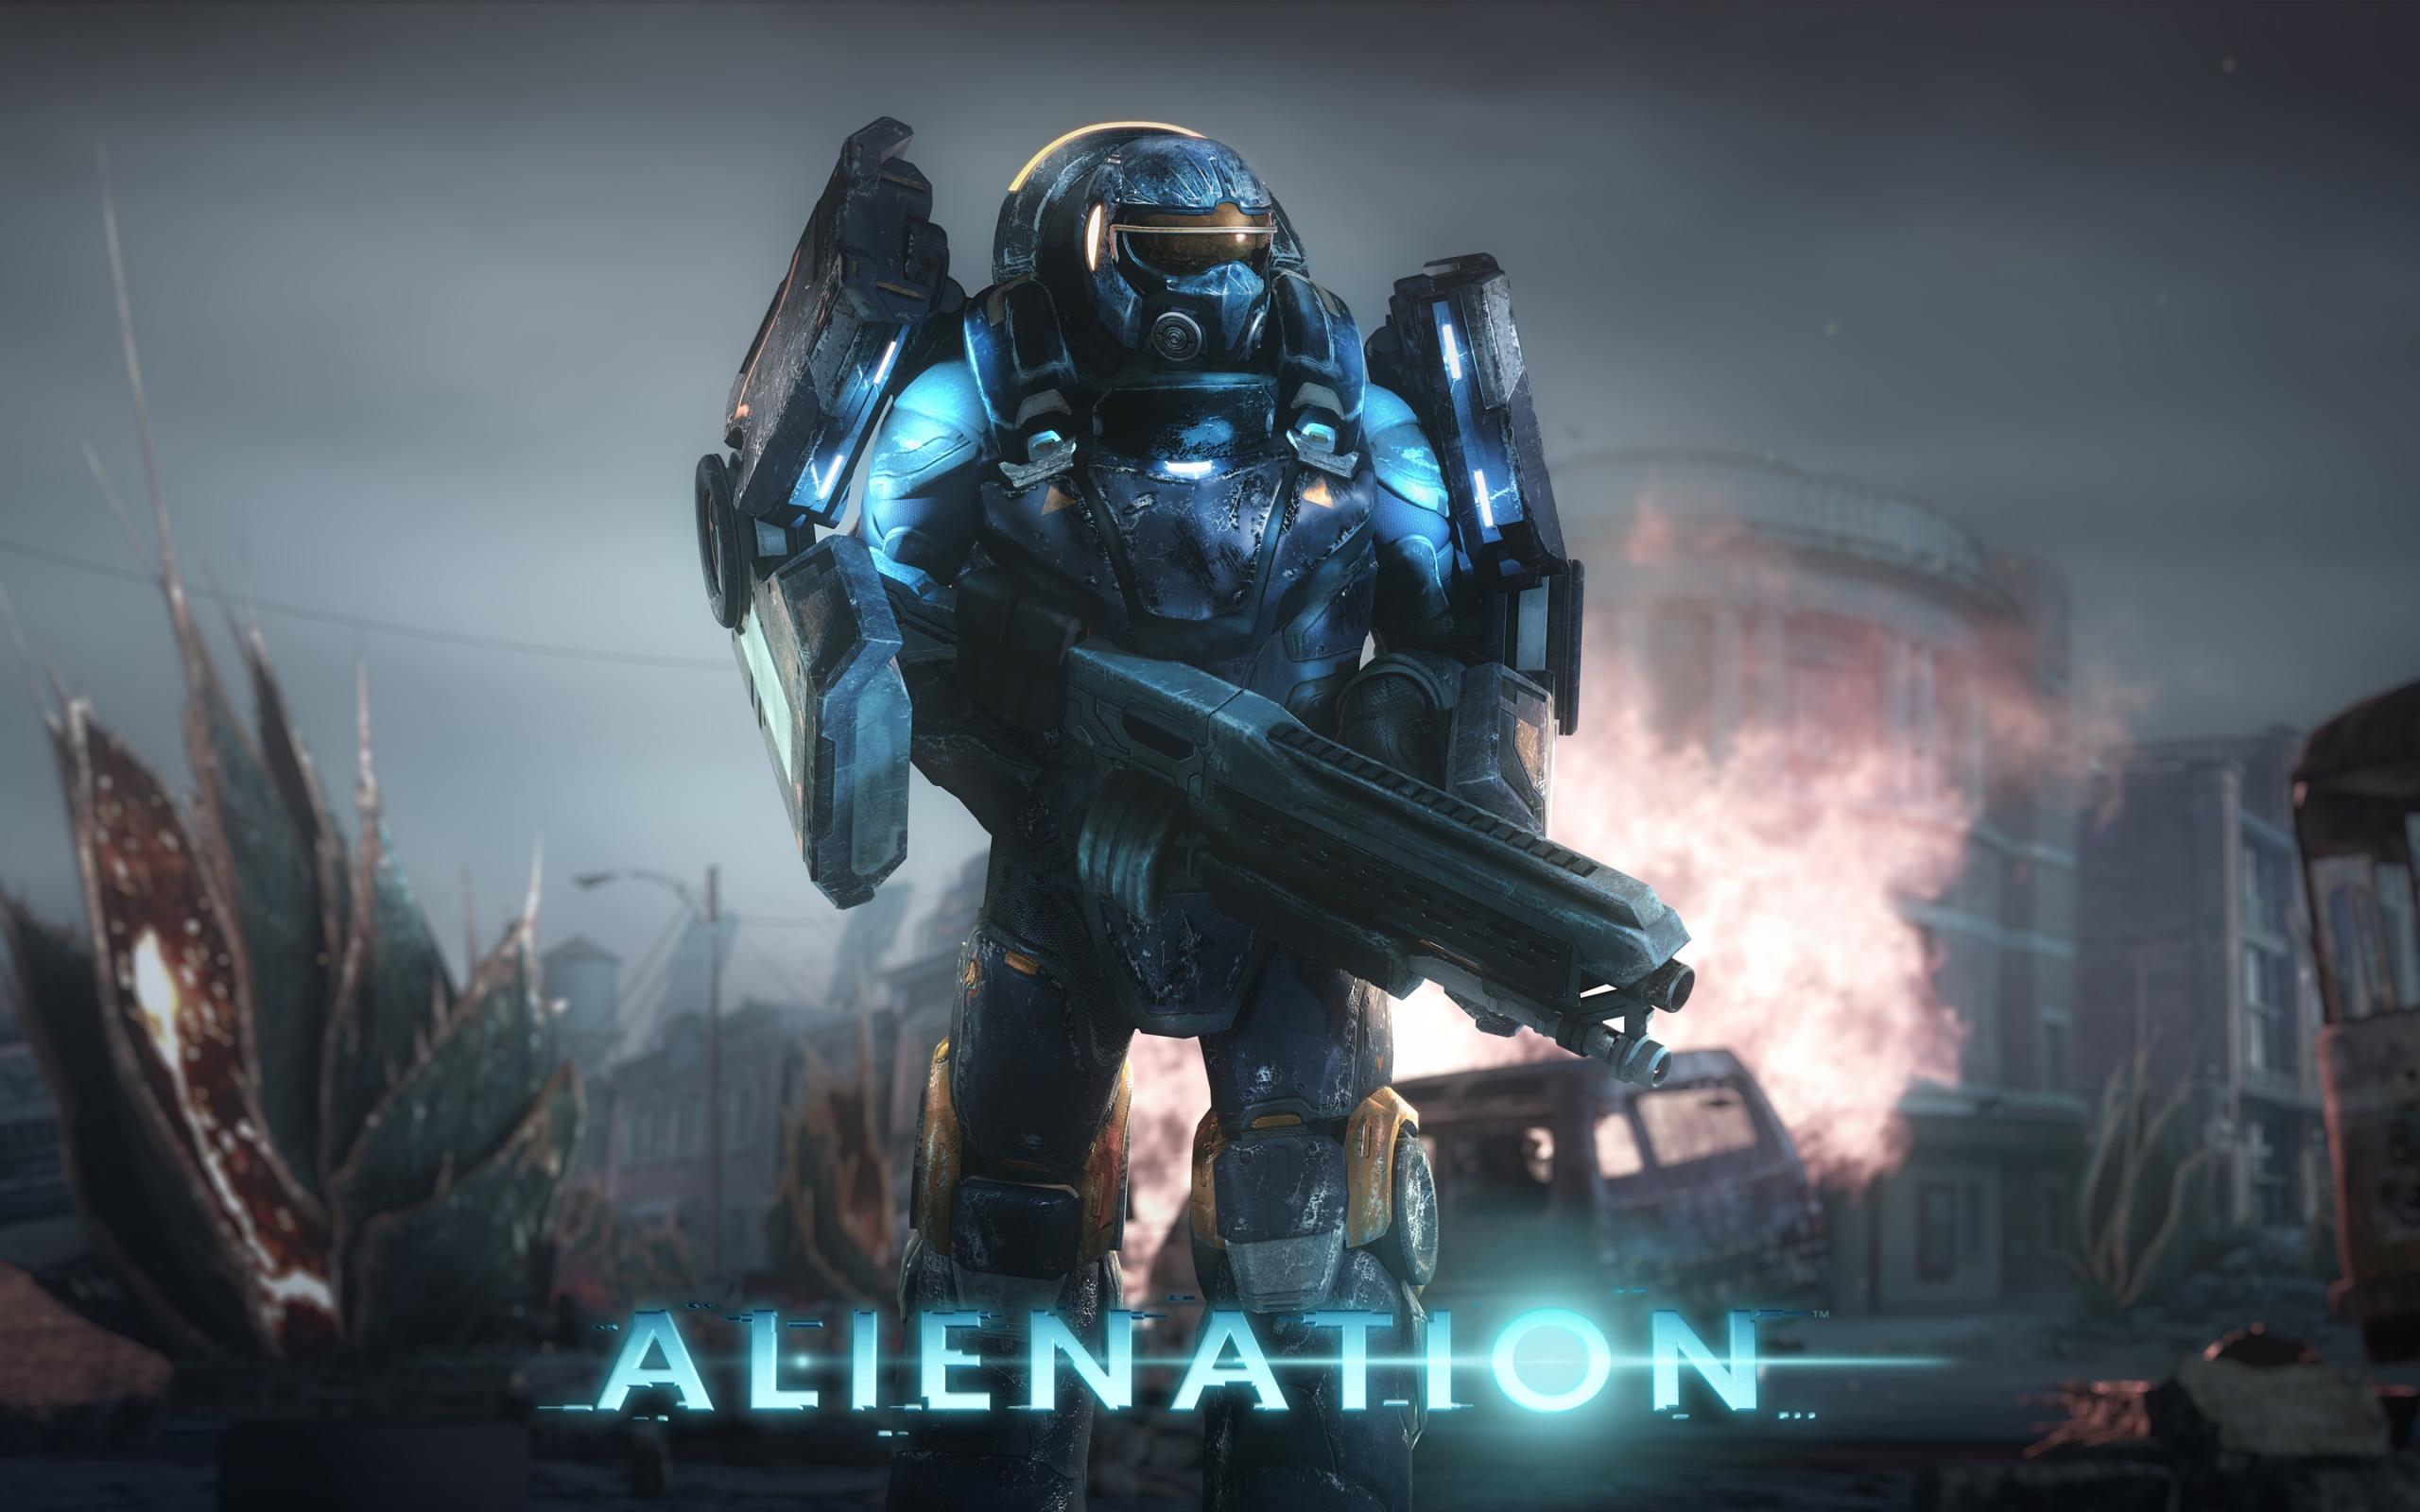 Alienation PS4 Game 4K 8K Wallpaper in jpg format for free